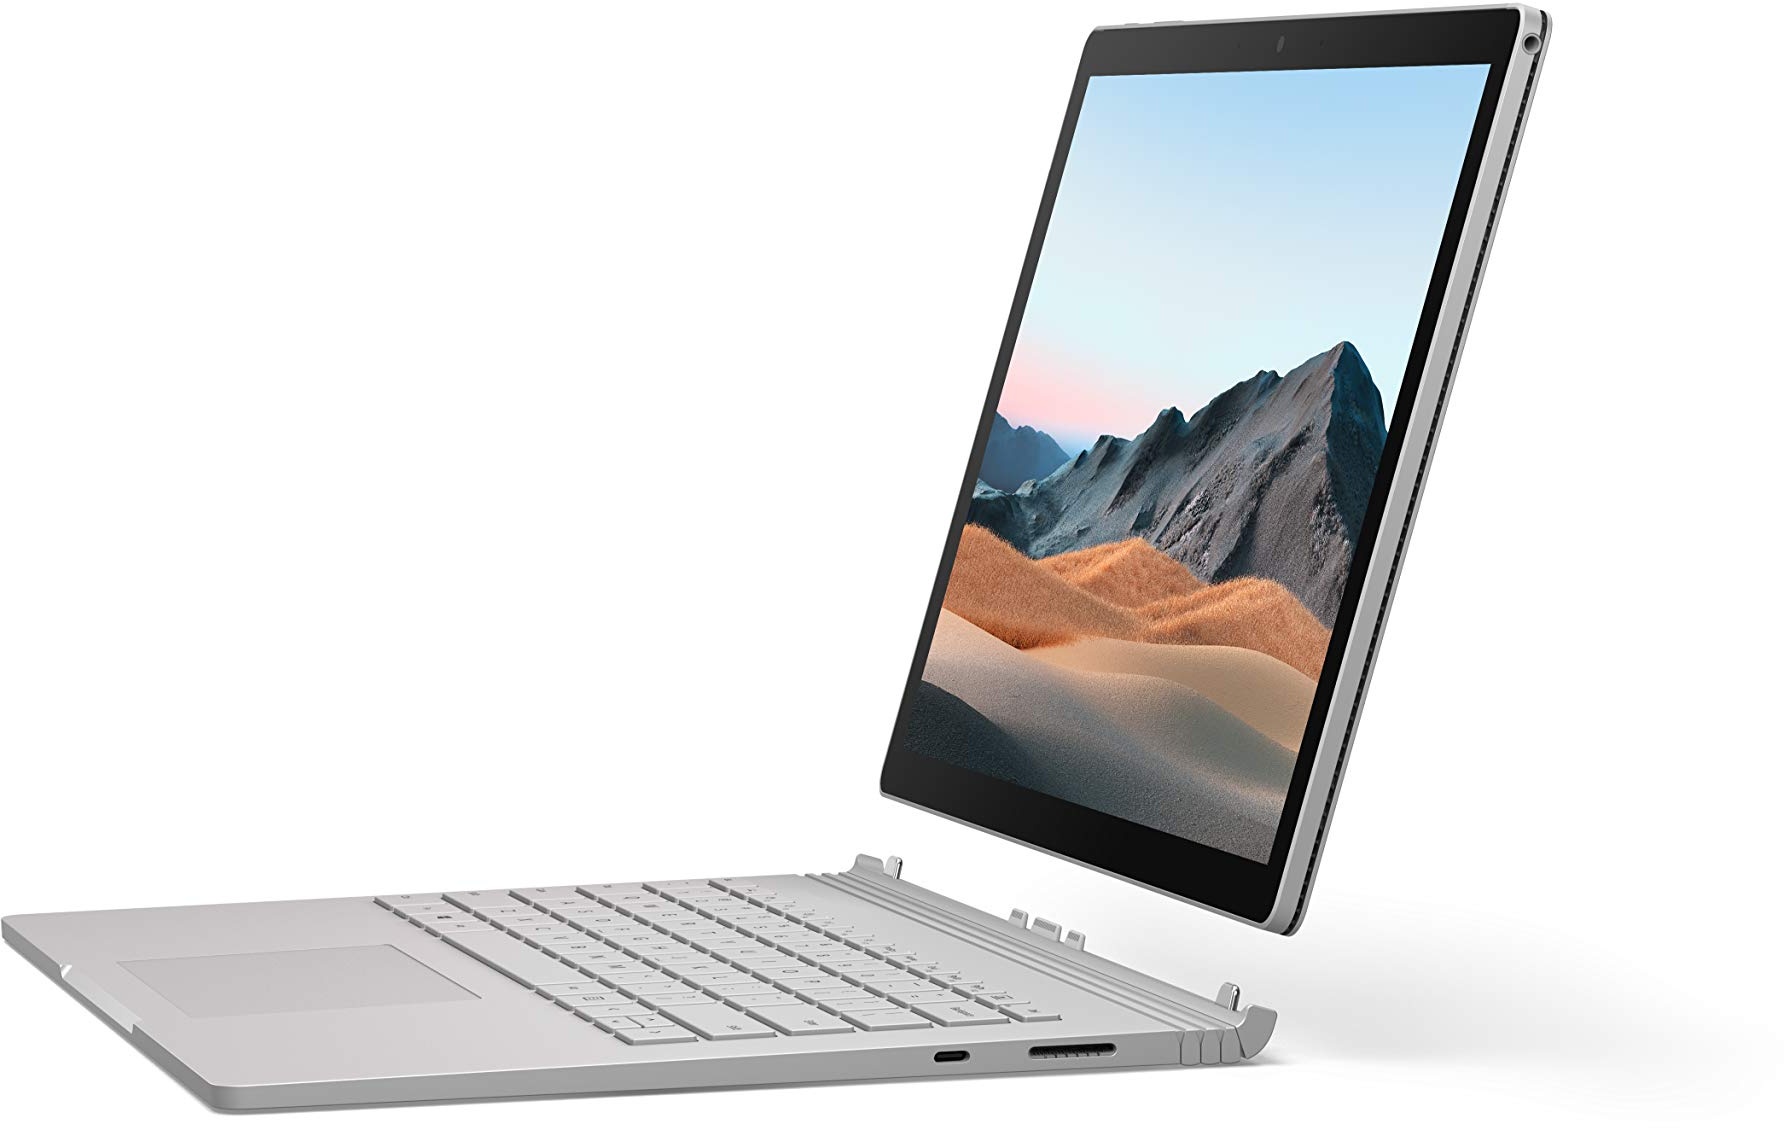 Microsoft Surface Book 3 33,8 cm (13,5 Zoll) Notebook (Intel i7, 16 GB RAM, 256 GB SSD, 1650 NVIDIA Graphics, Windows 10 Home, Modell 2020) silberfarben